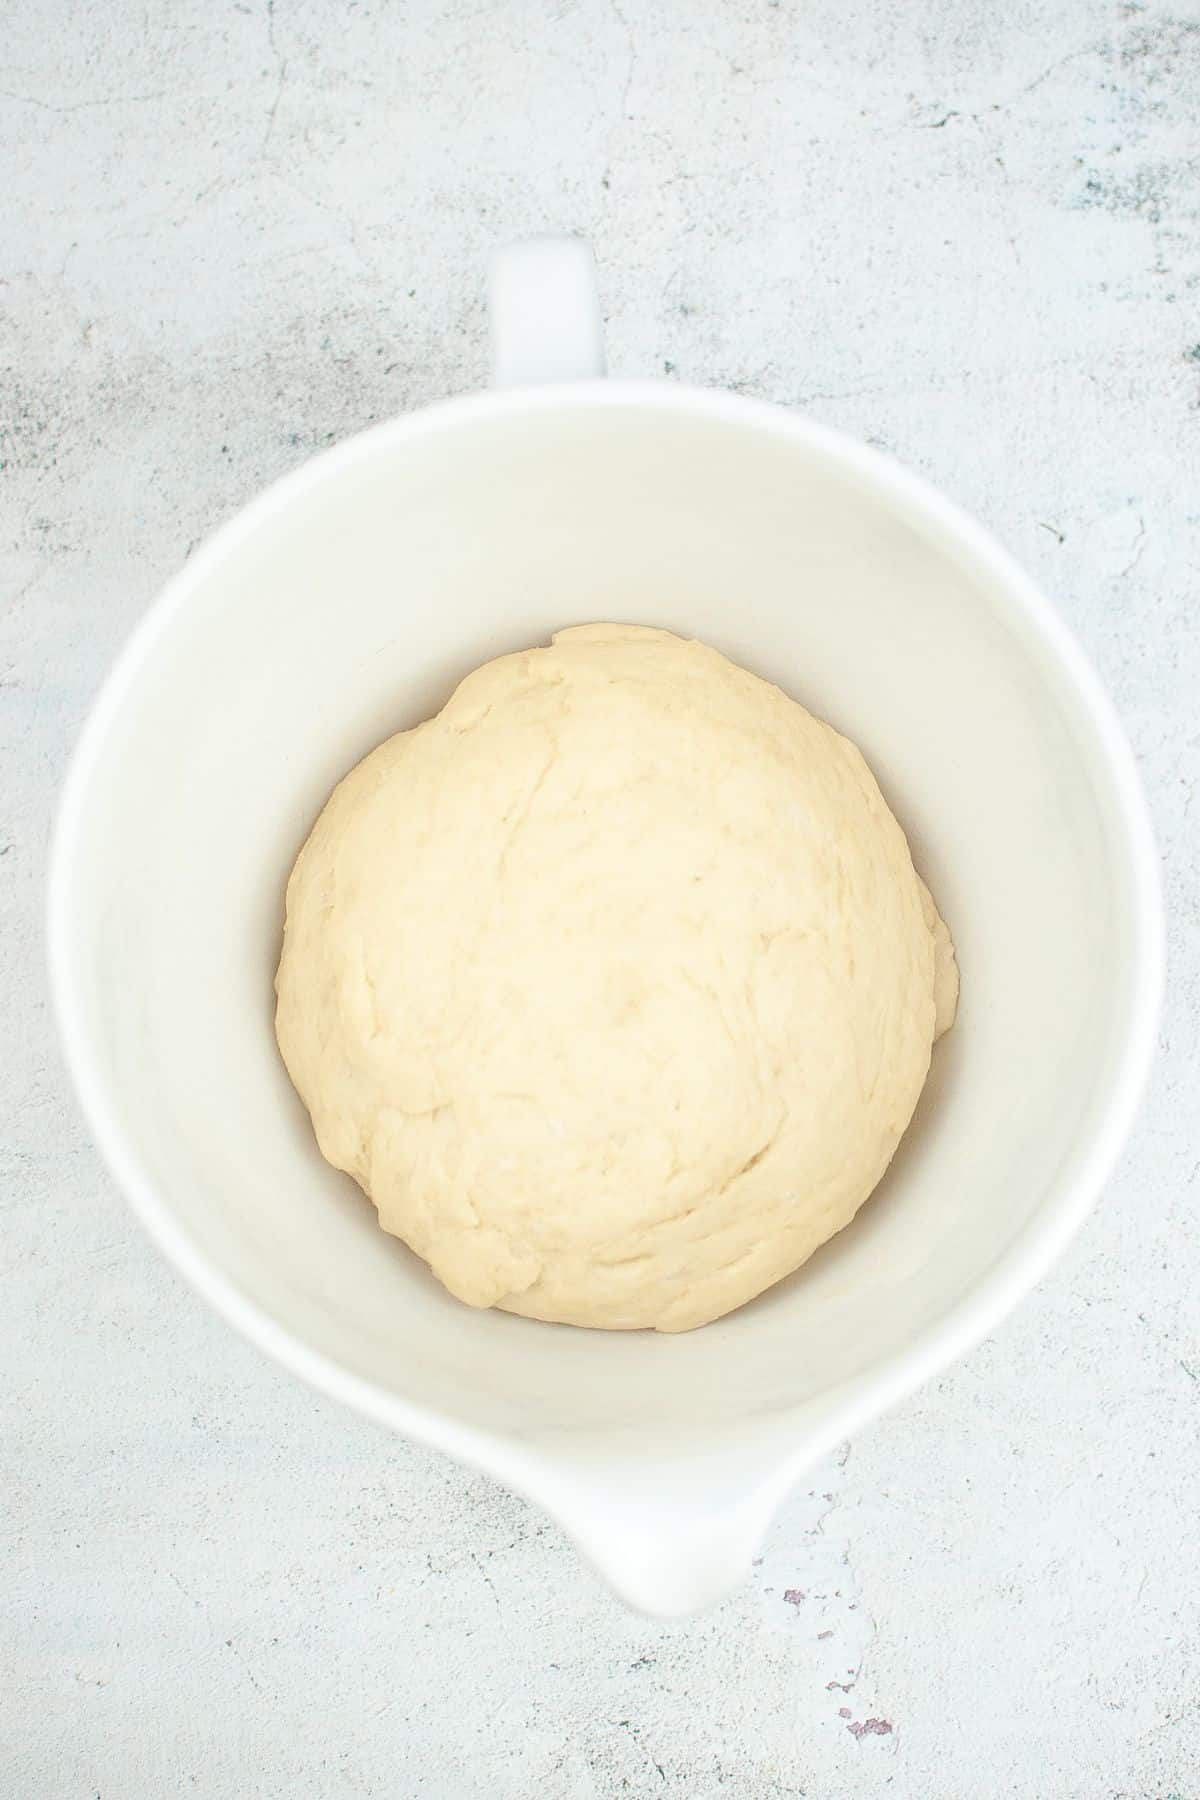 dough that has risen in a white mixing bowl